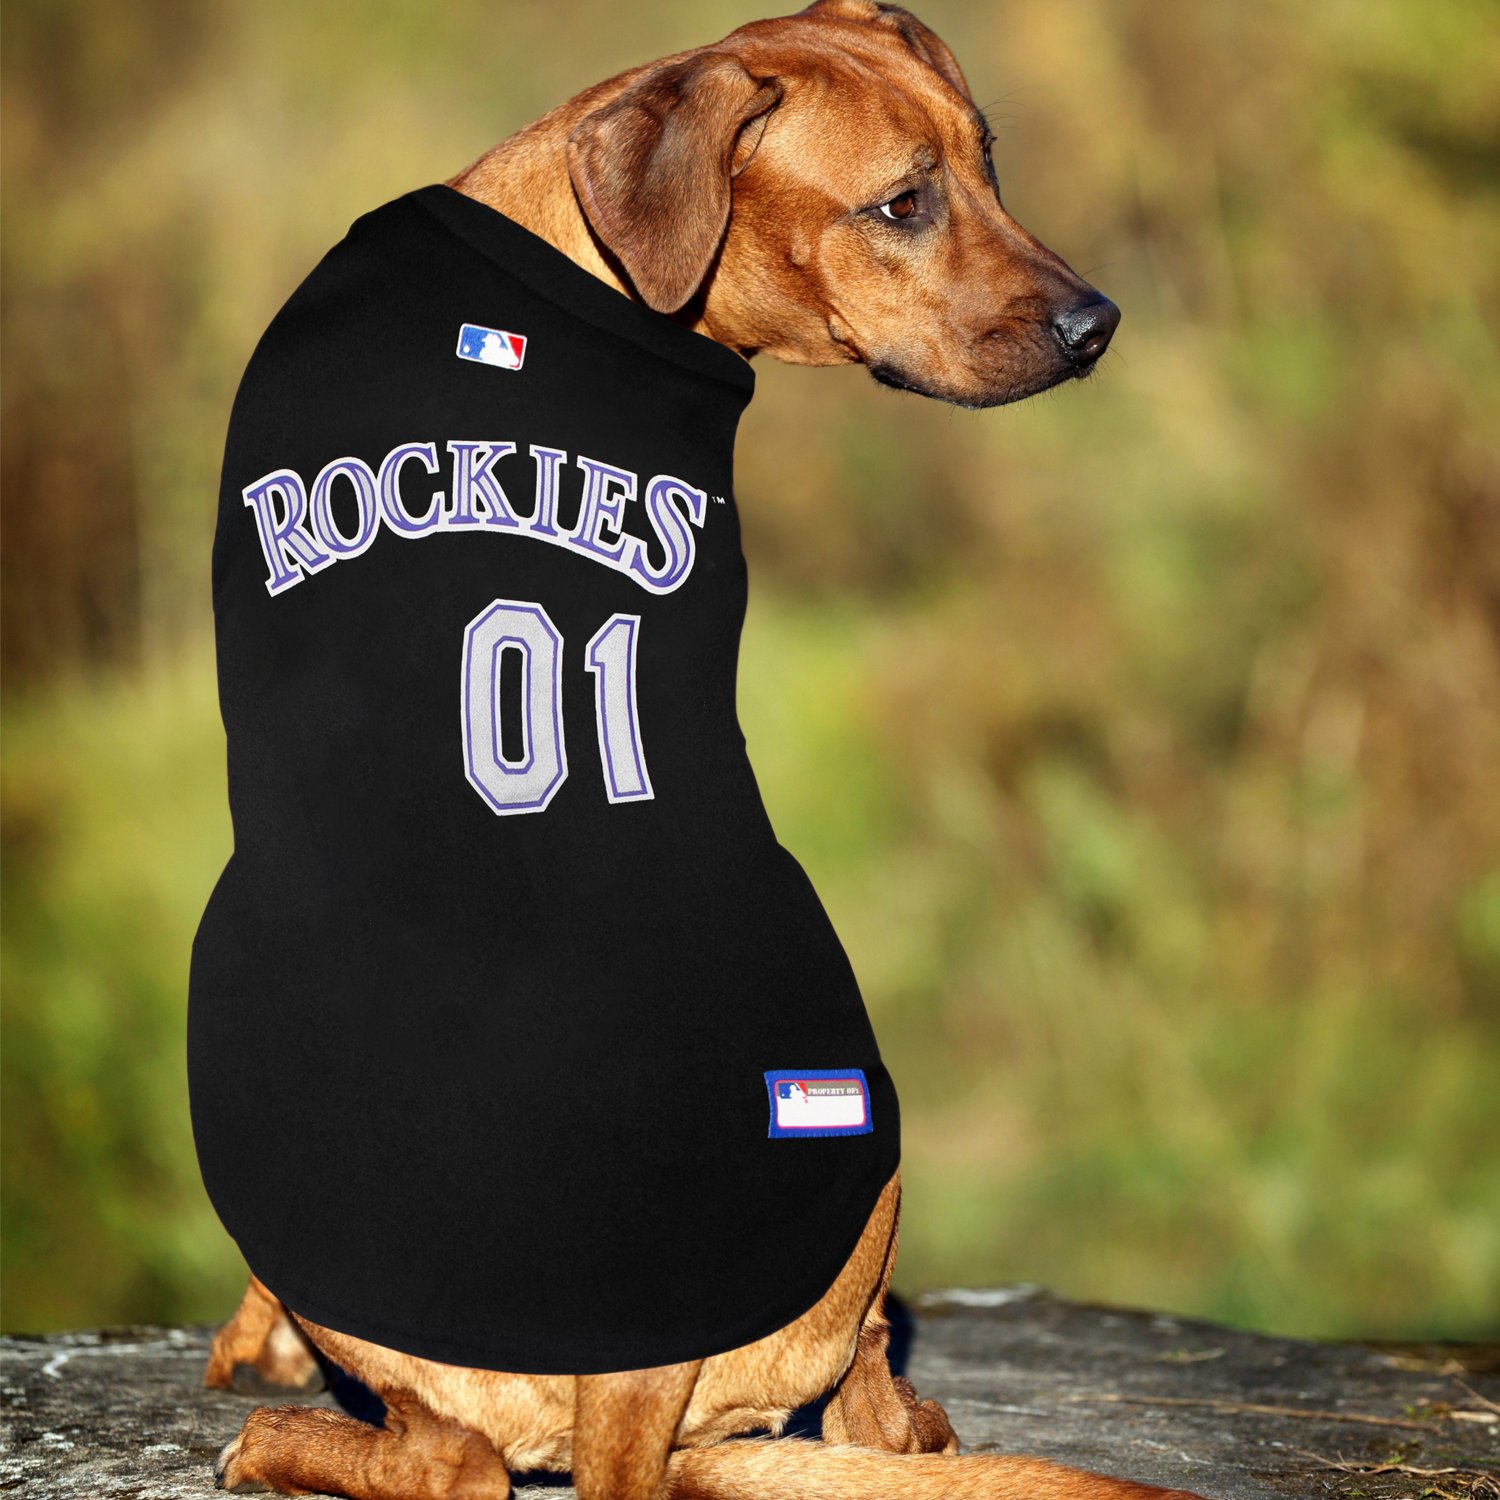 rockies dog jersey